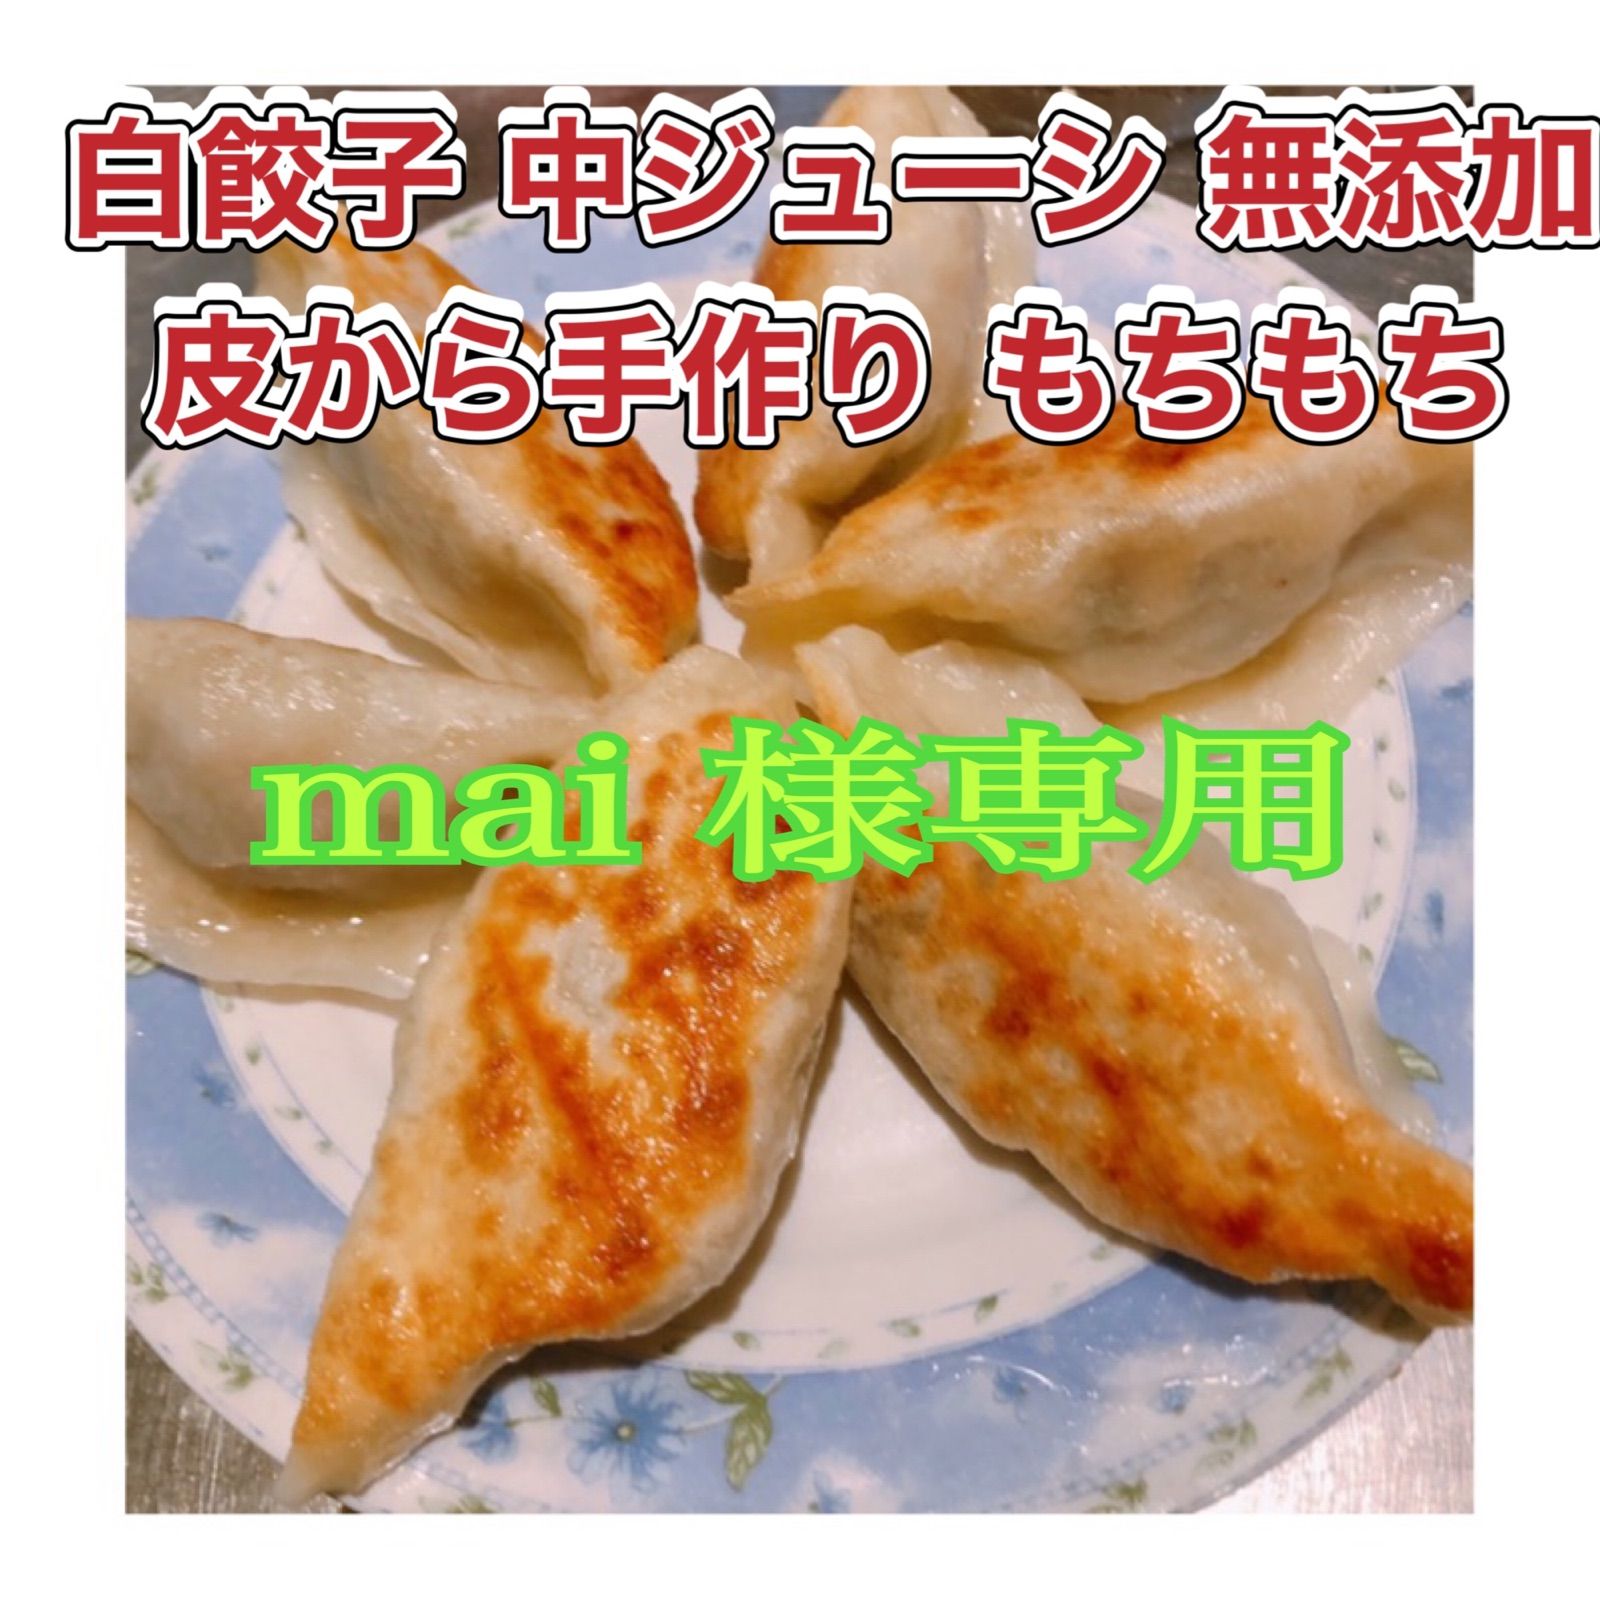 mai様専用 - 飲茶フェーフェー - メルカリ